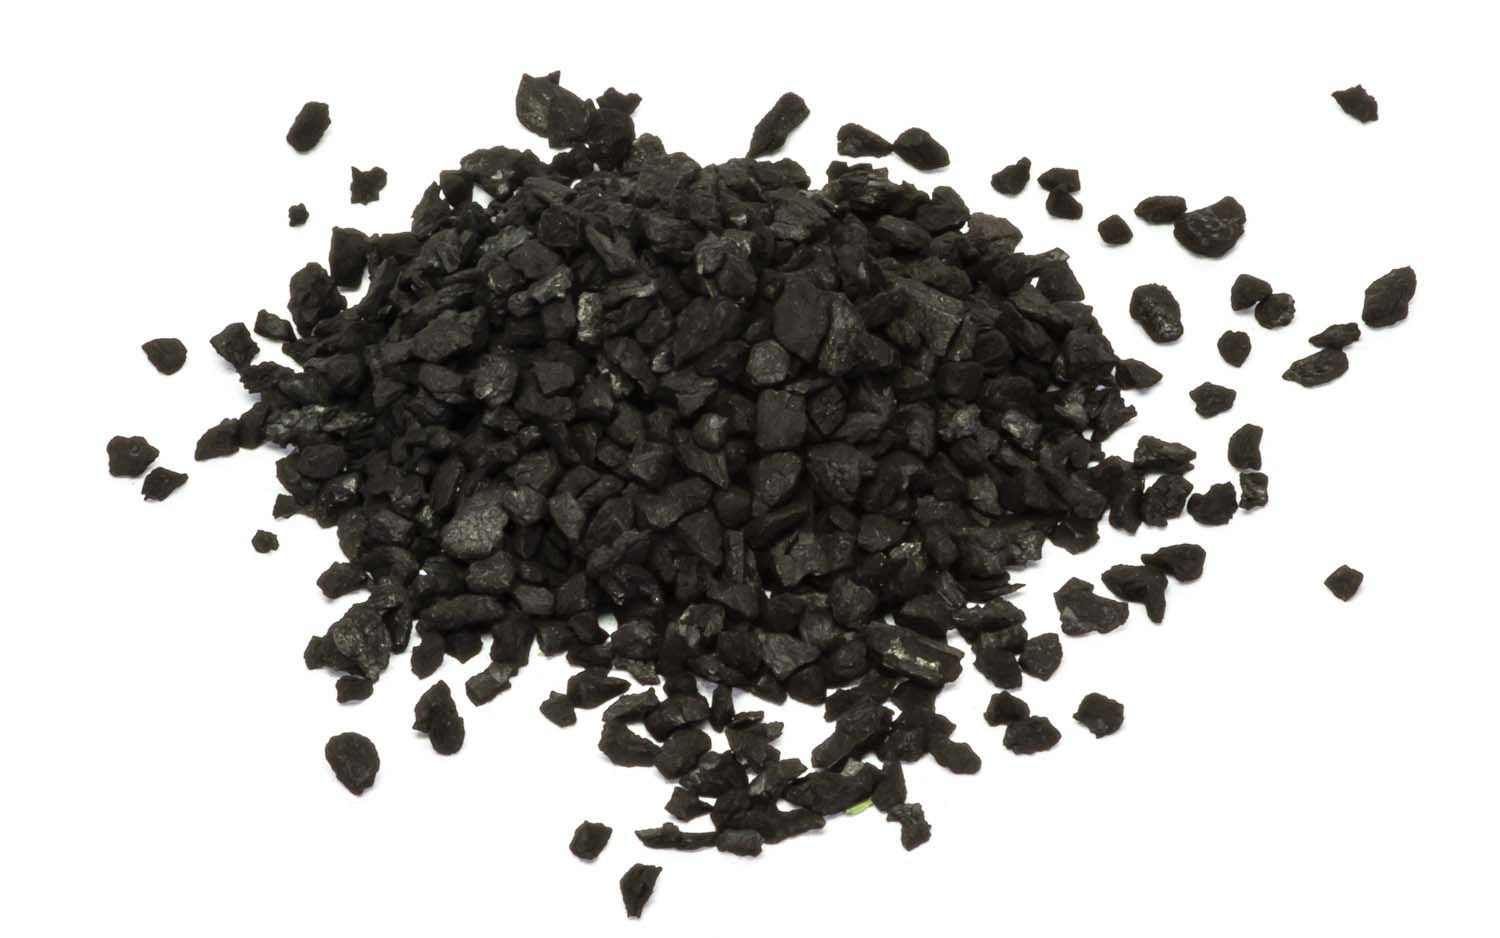 Ballast - Coal - Loaded Dice